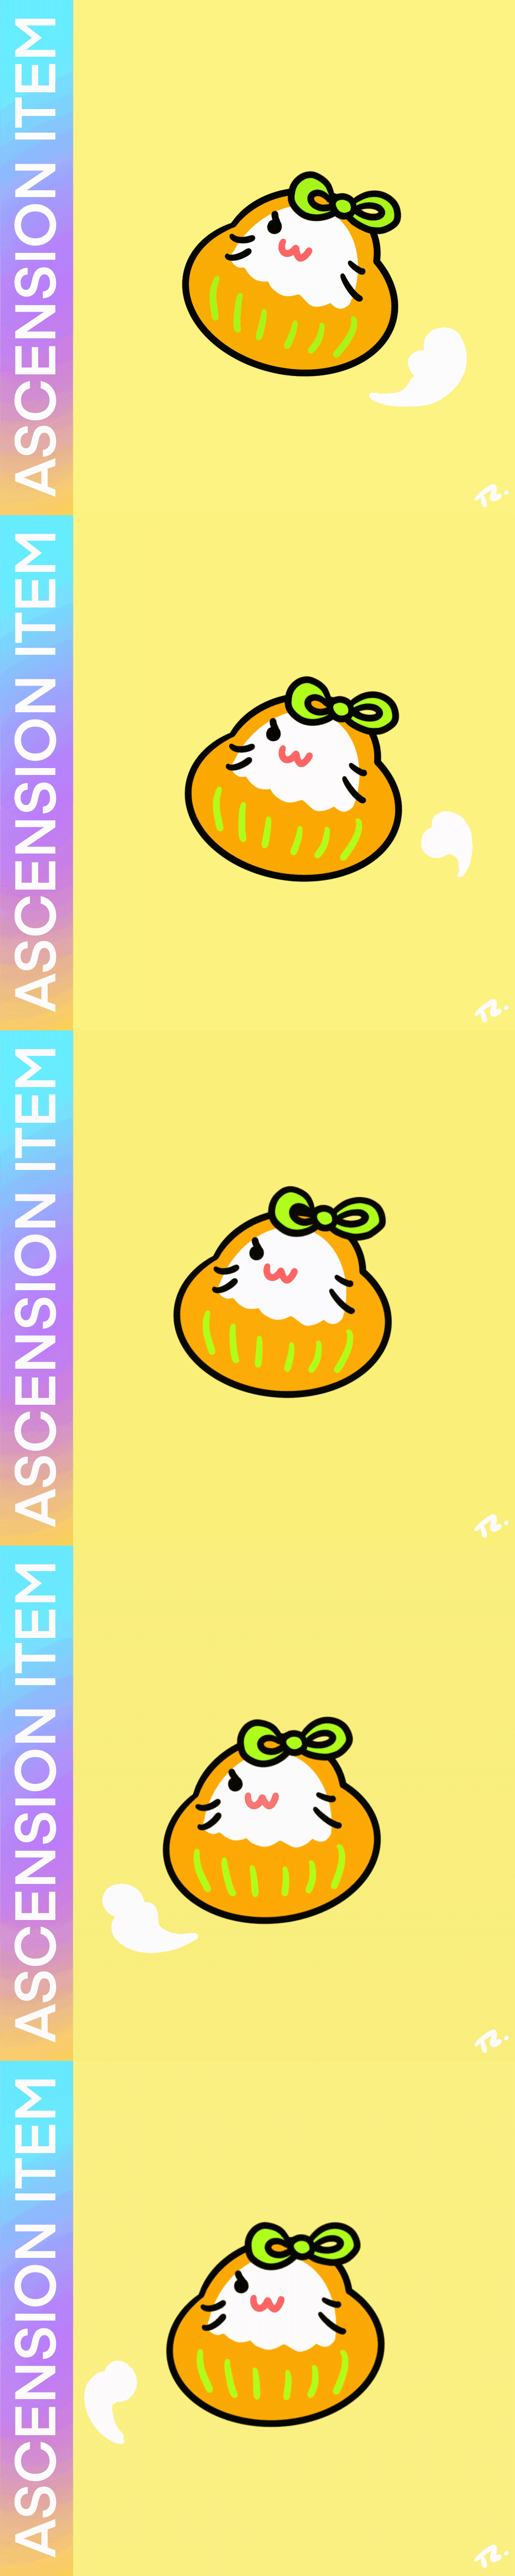 #8 - Ascension Item: Infinity [Manekirei Shop]